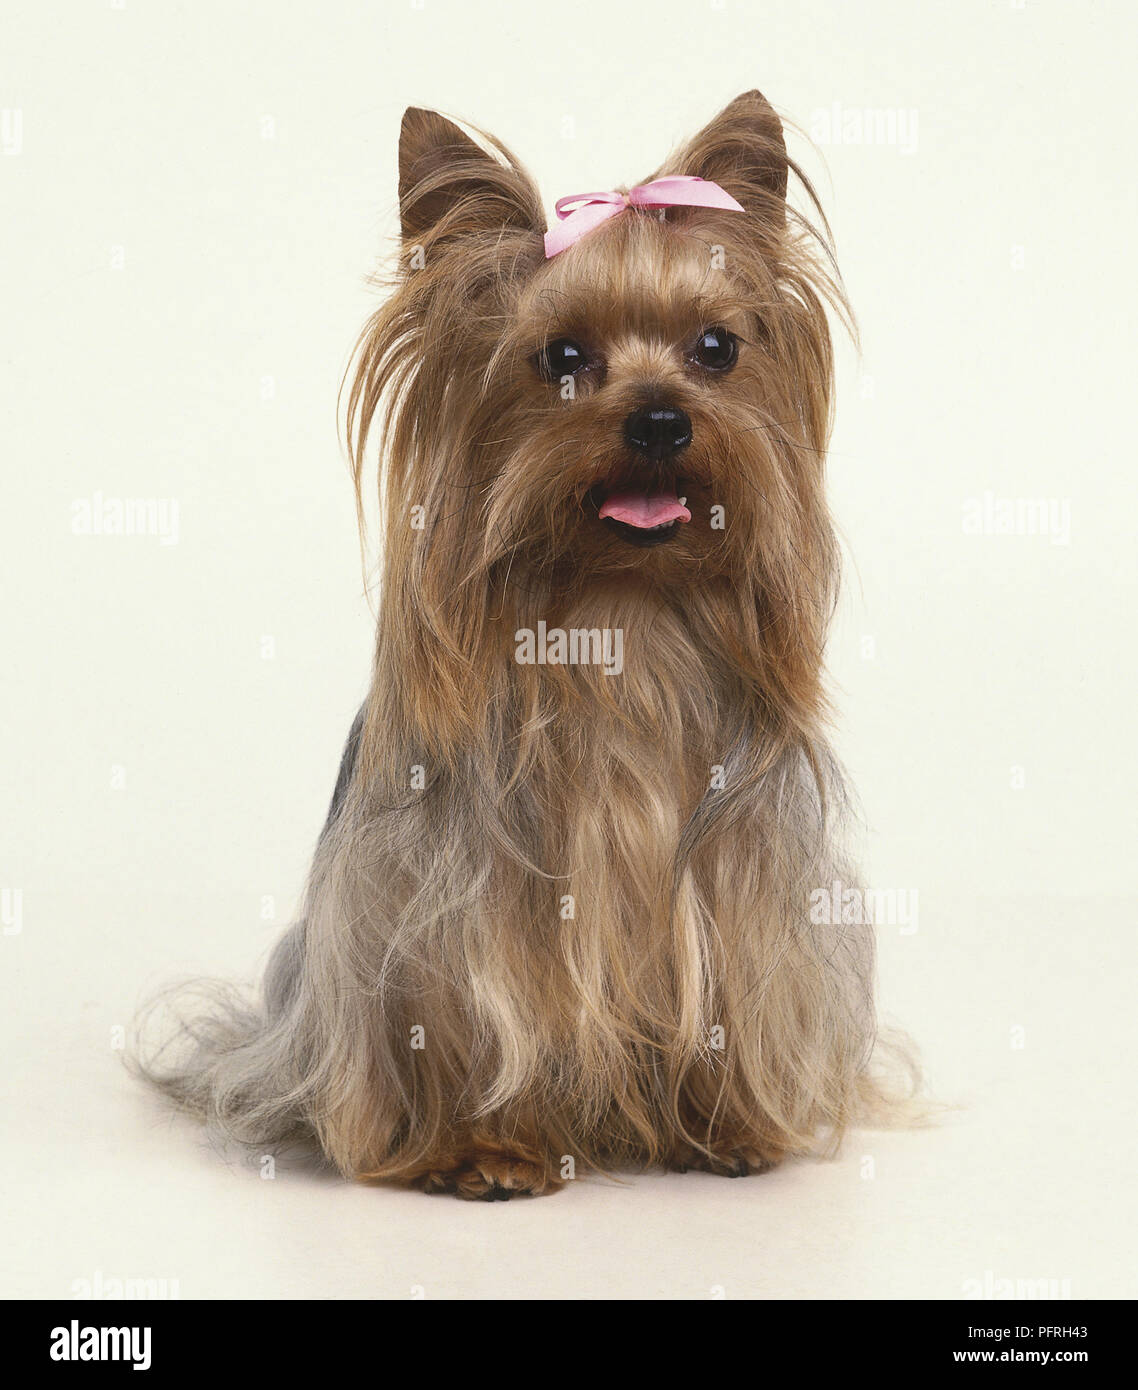 Doe voorzichtig actie visie A Yorkshire terrier wearing a pink bow Stock Photo - Alamy